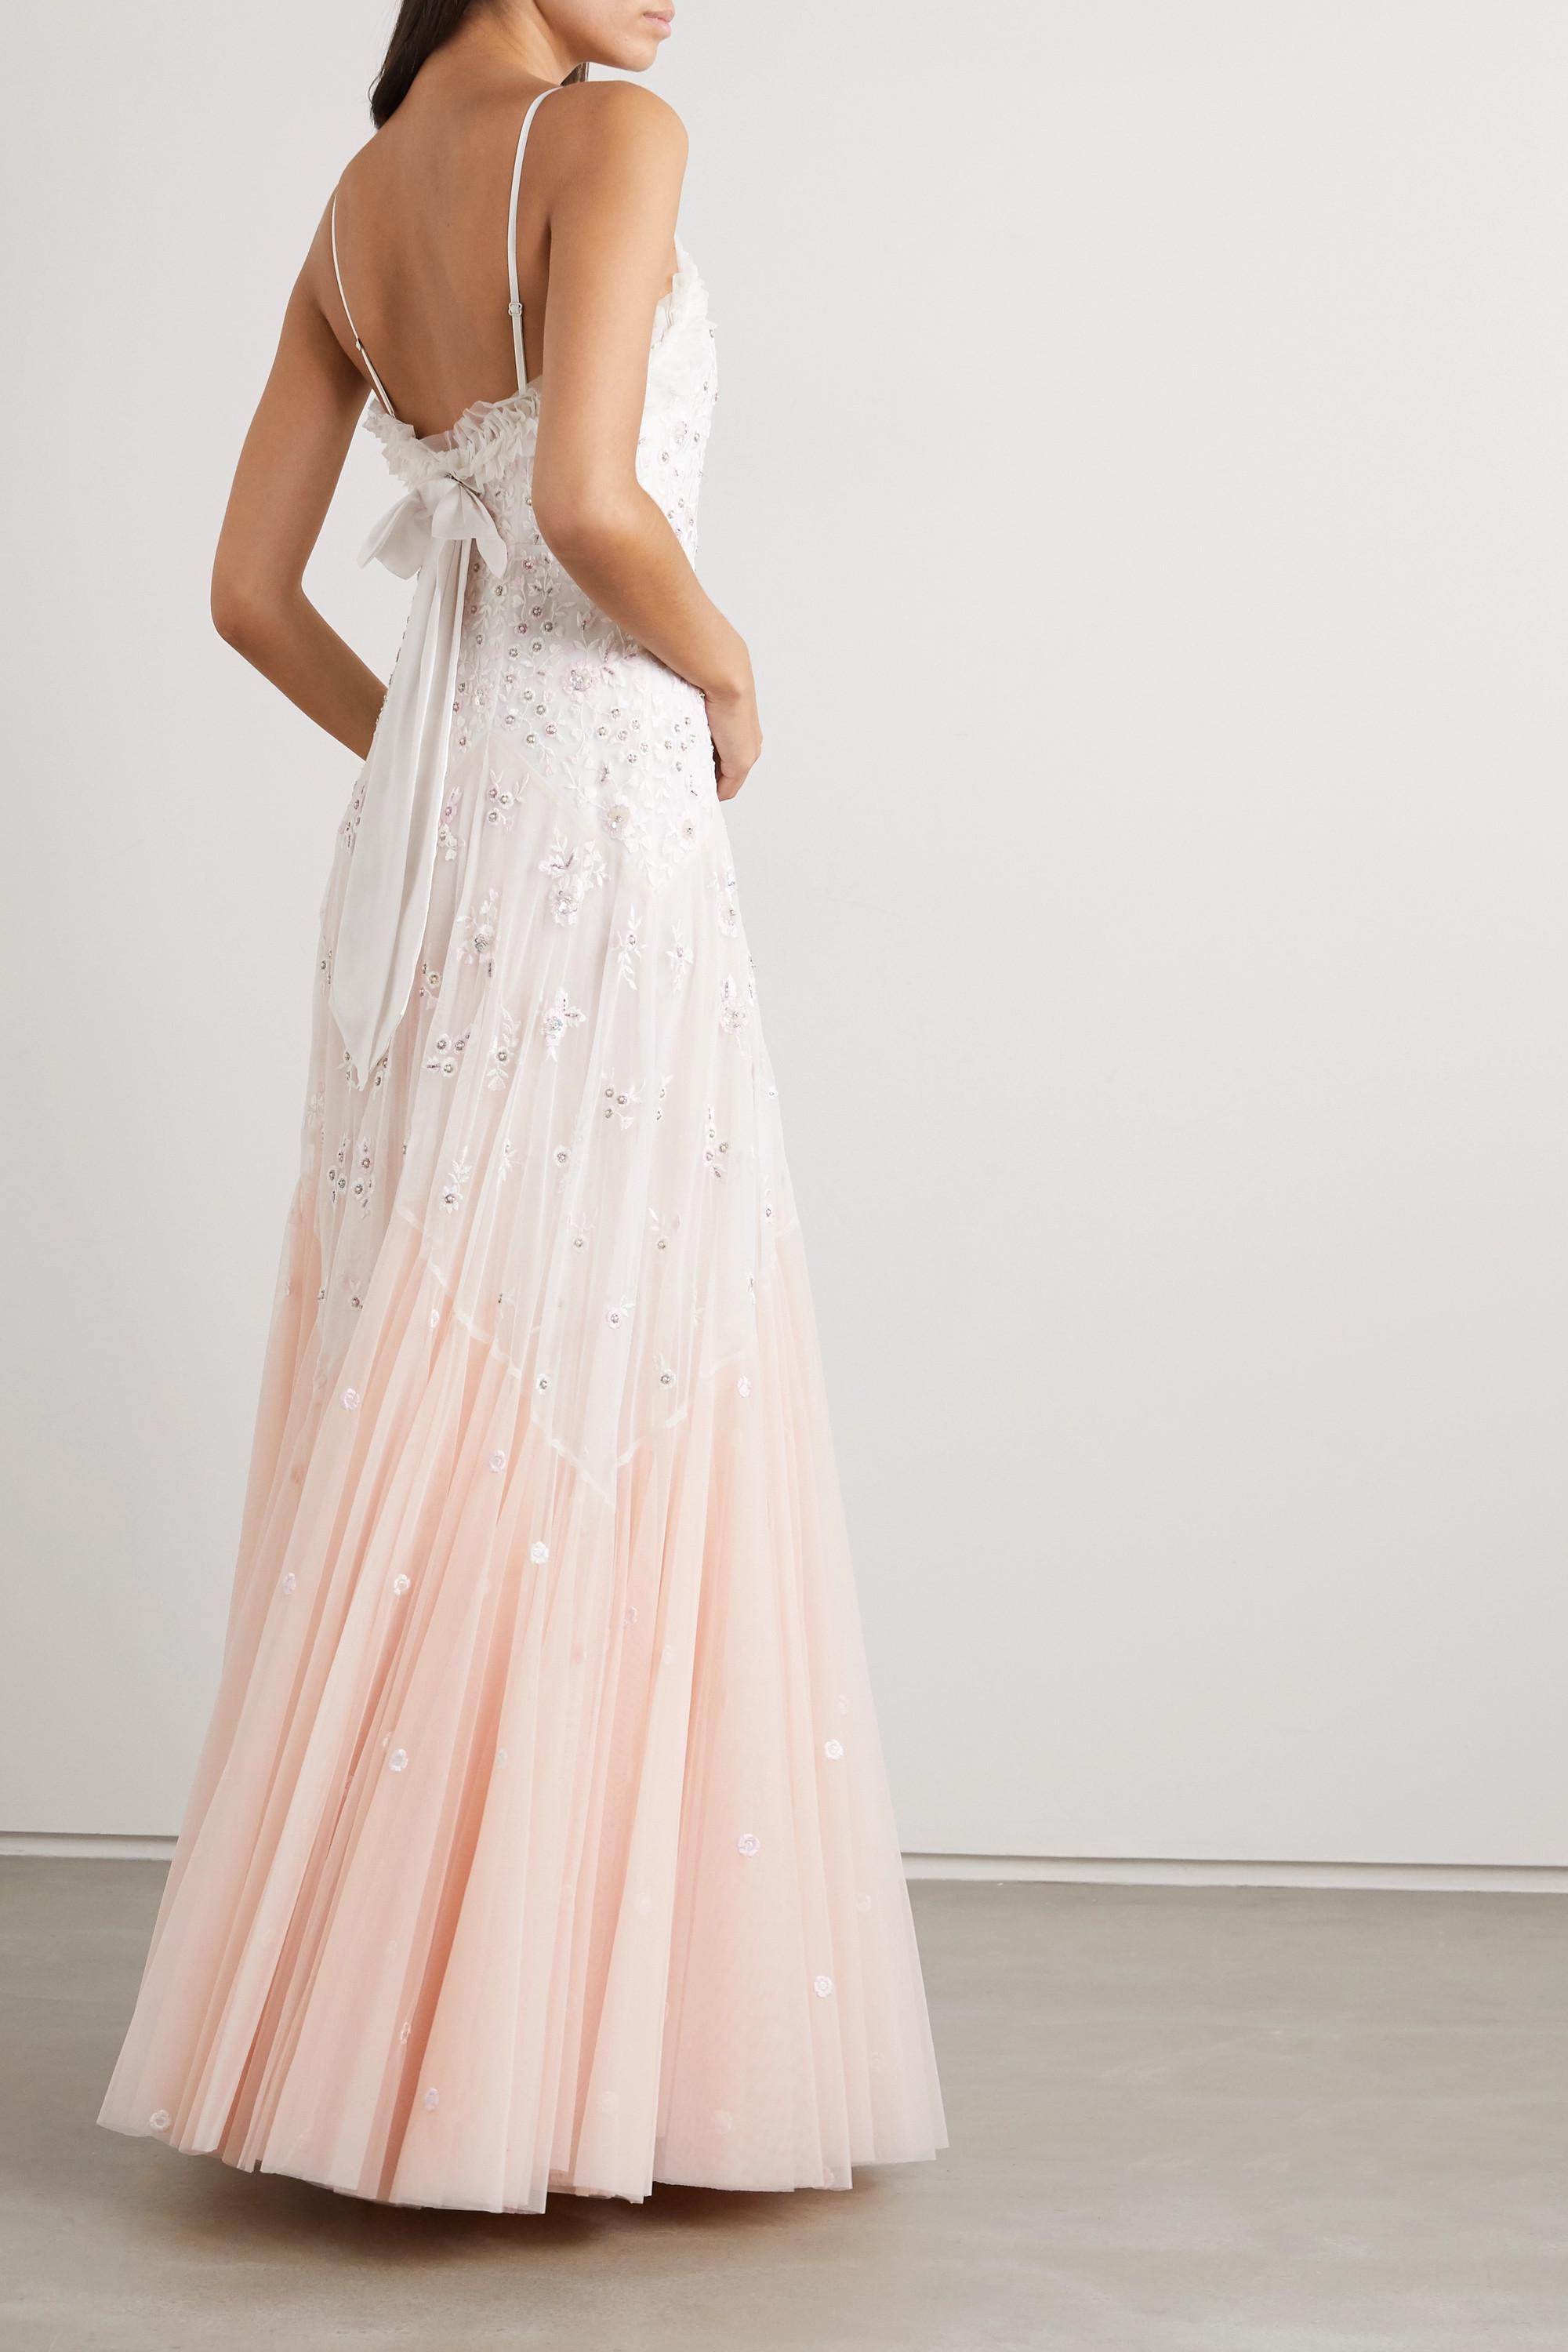 Starlit Gown | Needle & Thread | Needle & Thread | Embellished dress,  Fashion dresses, Needle and thread dresses